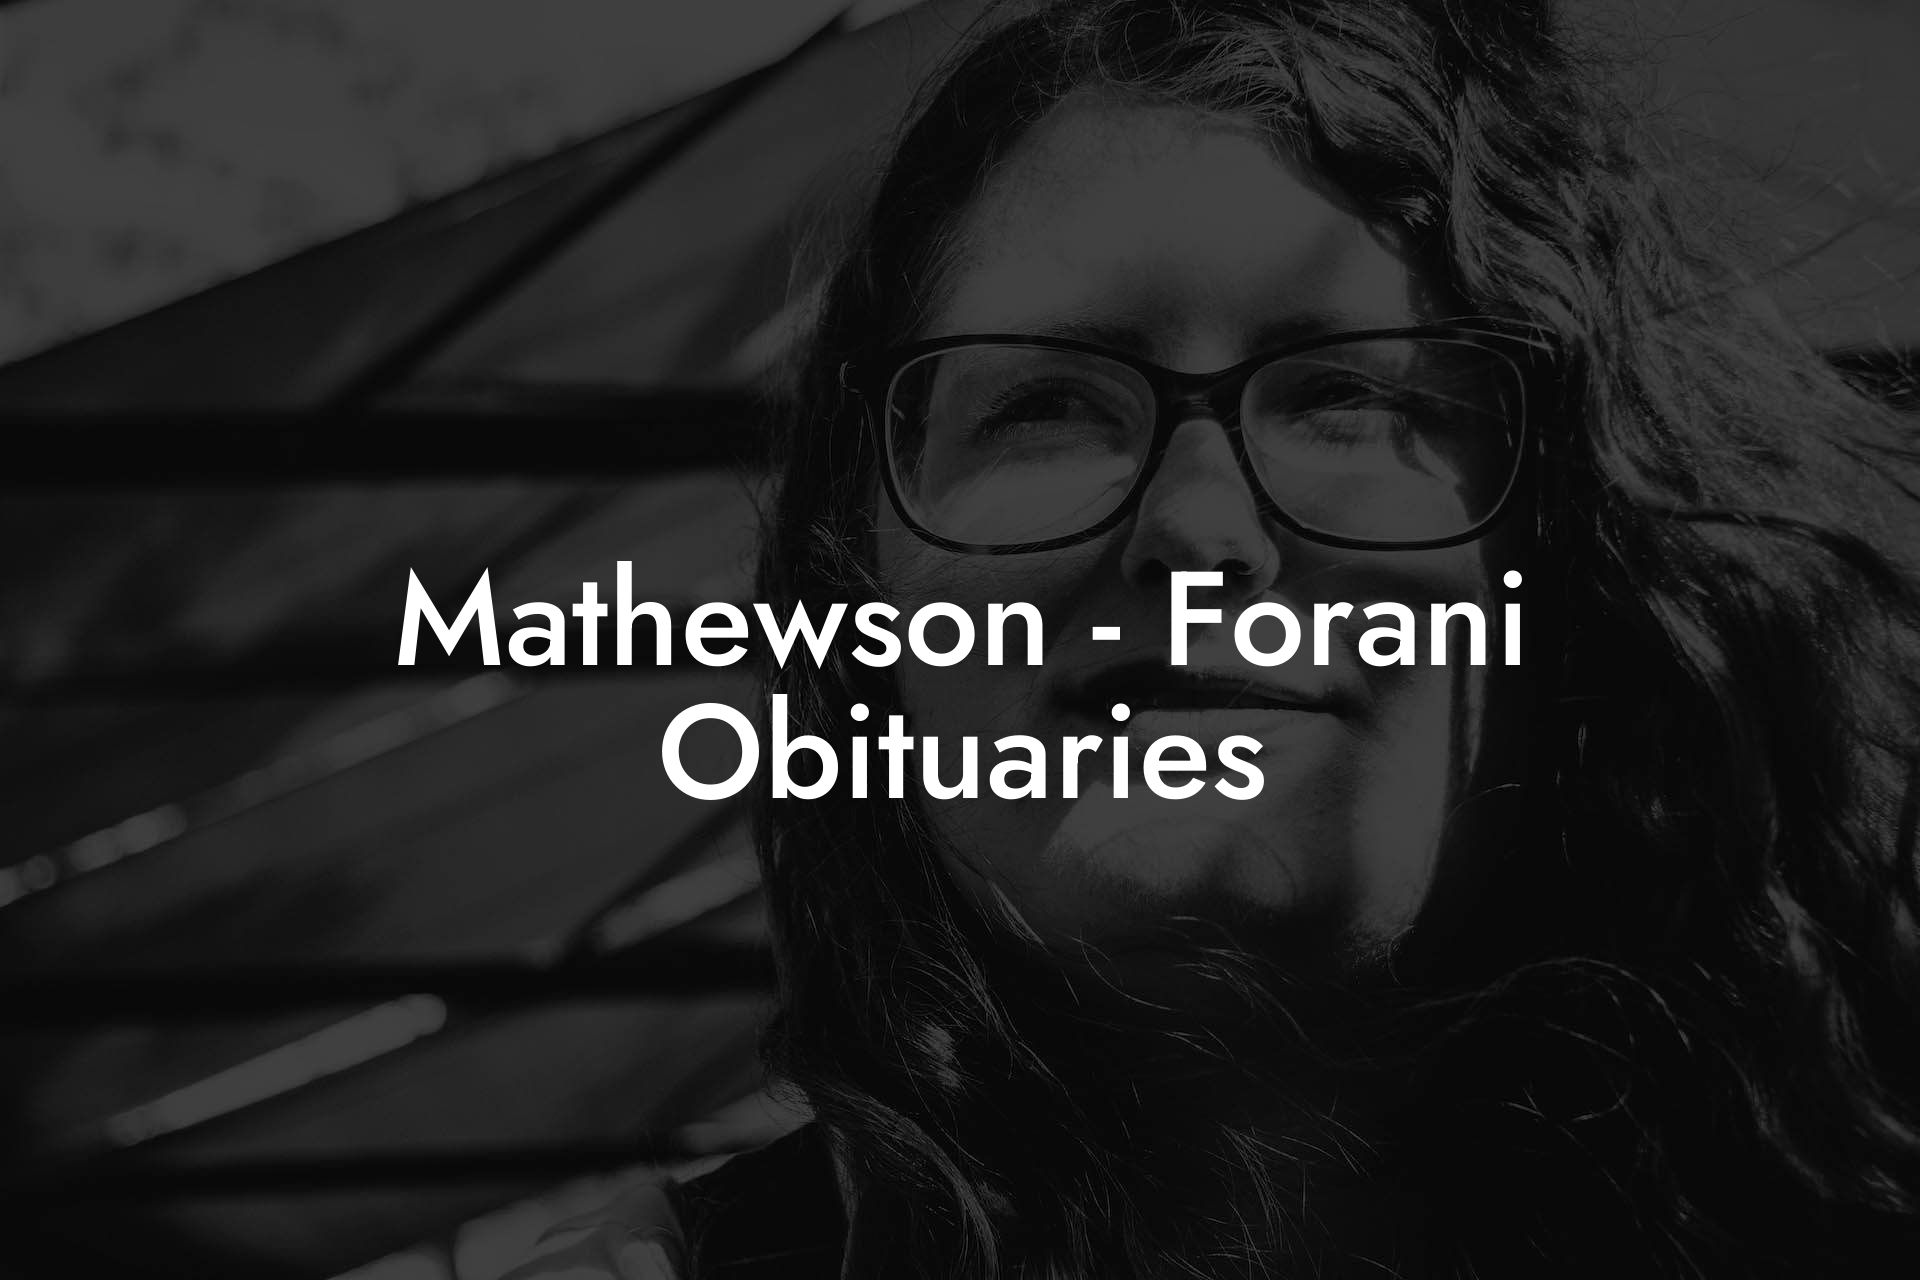 Mathewson - Forani Obituaries